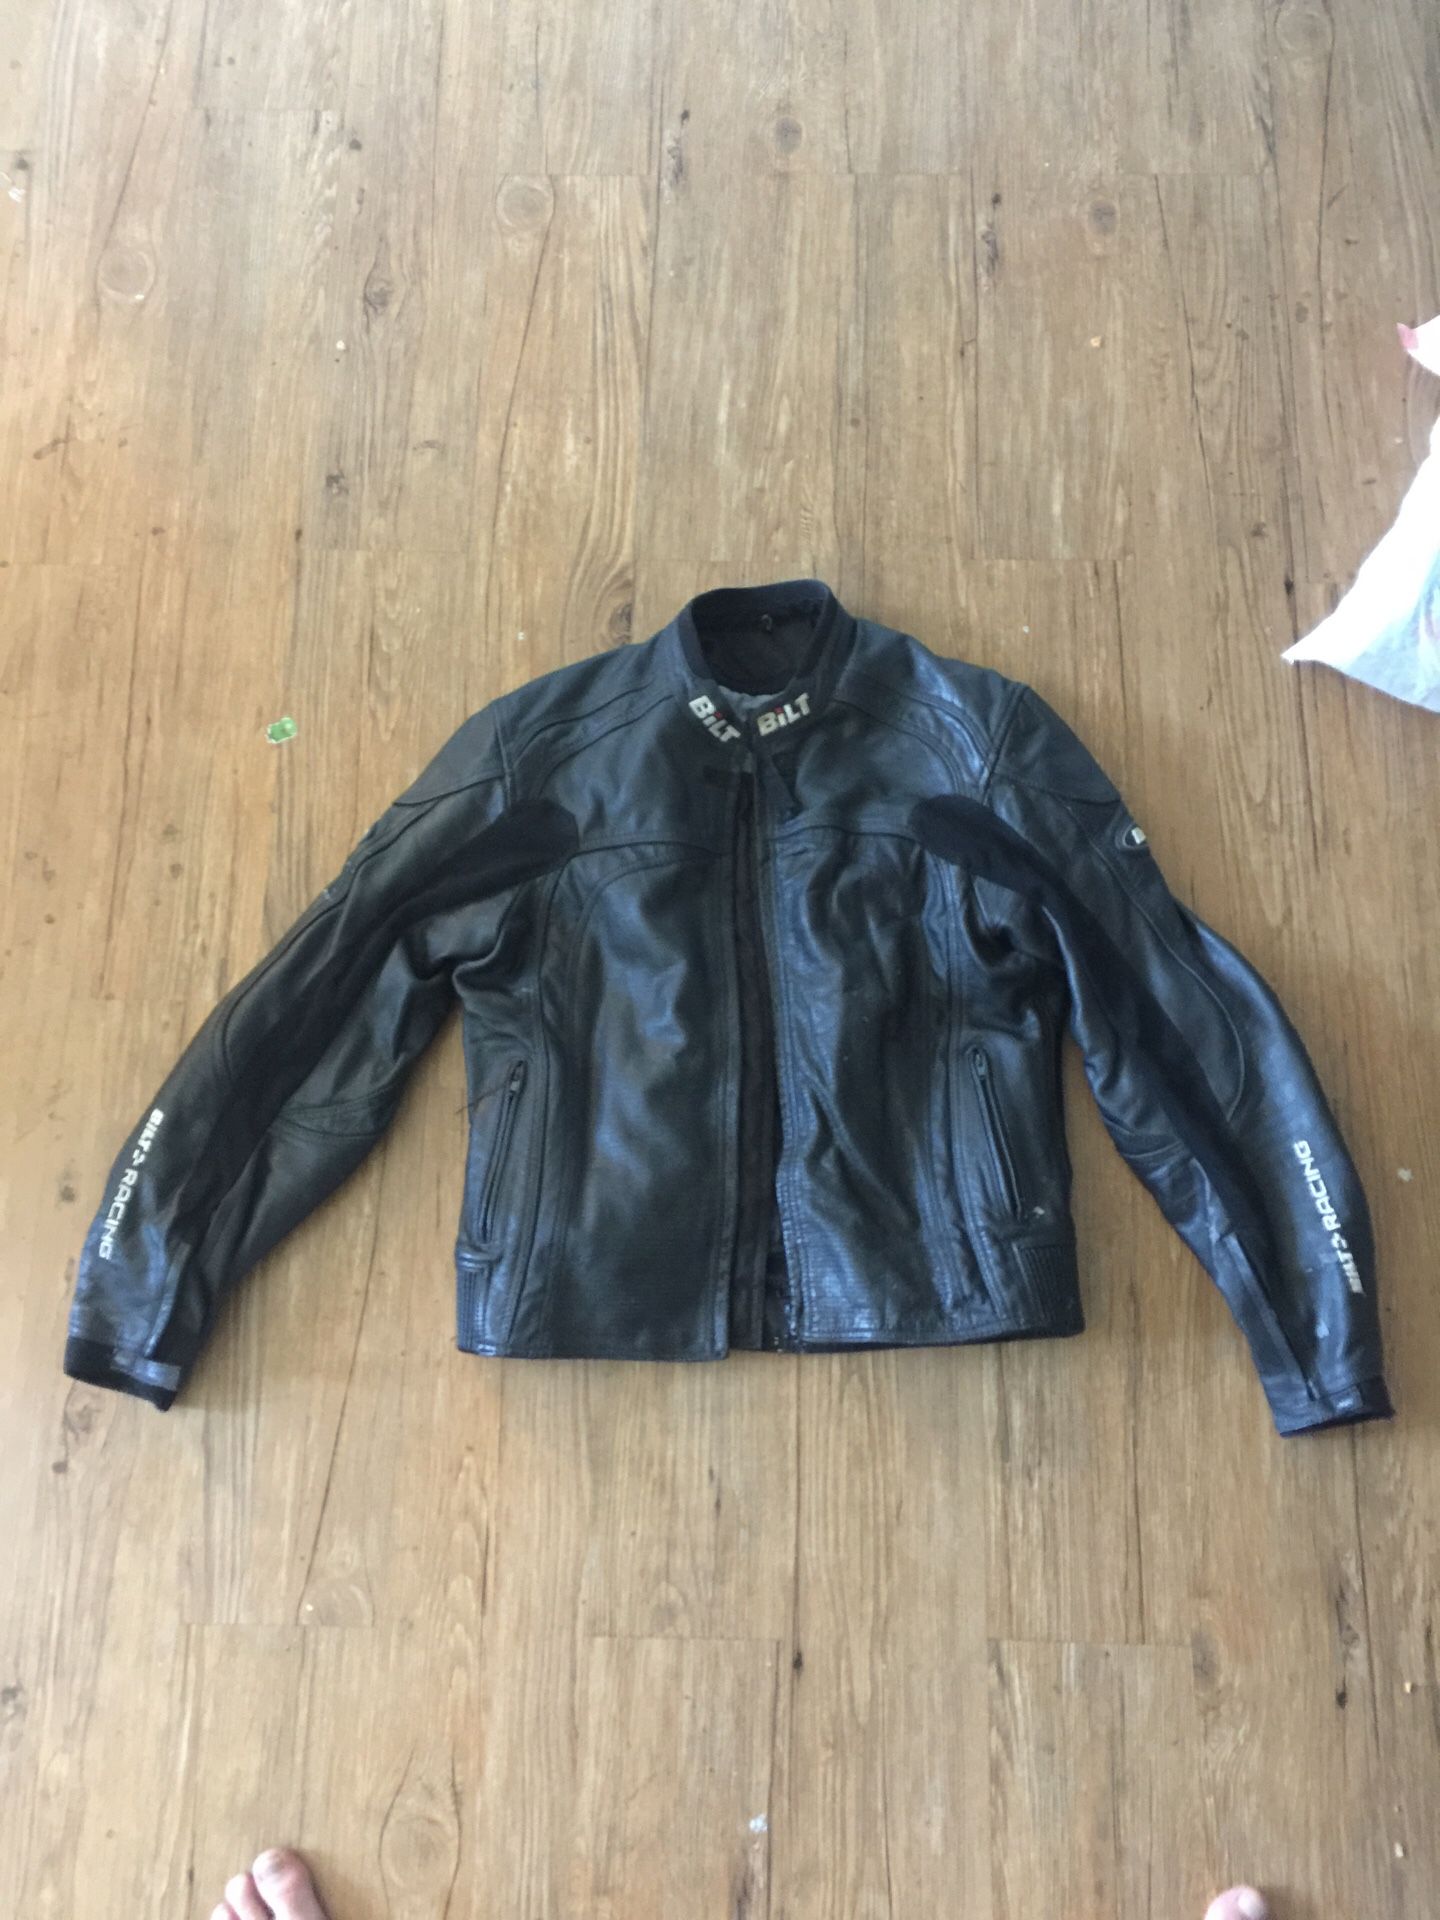 Leather motorcycle jacket $40